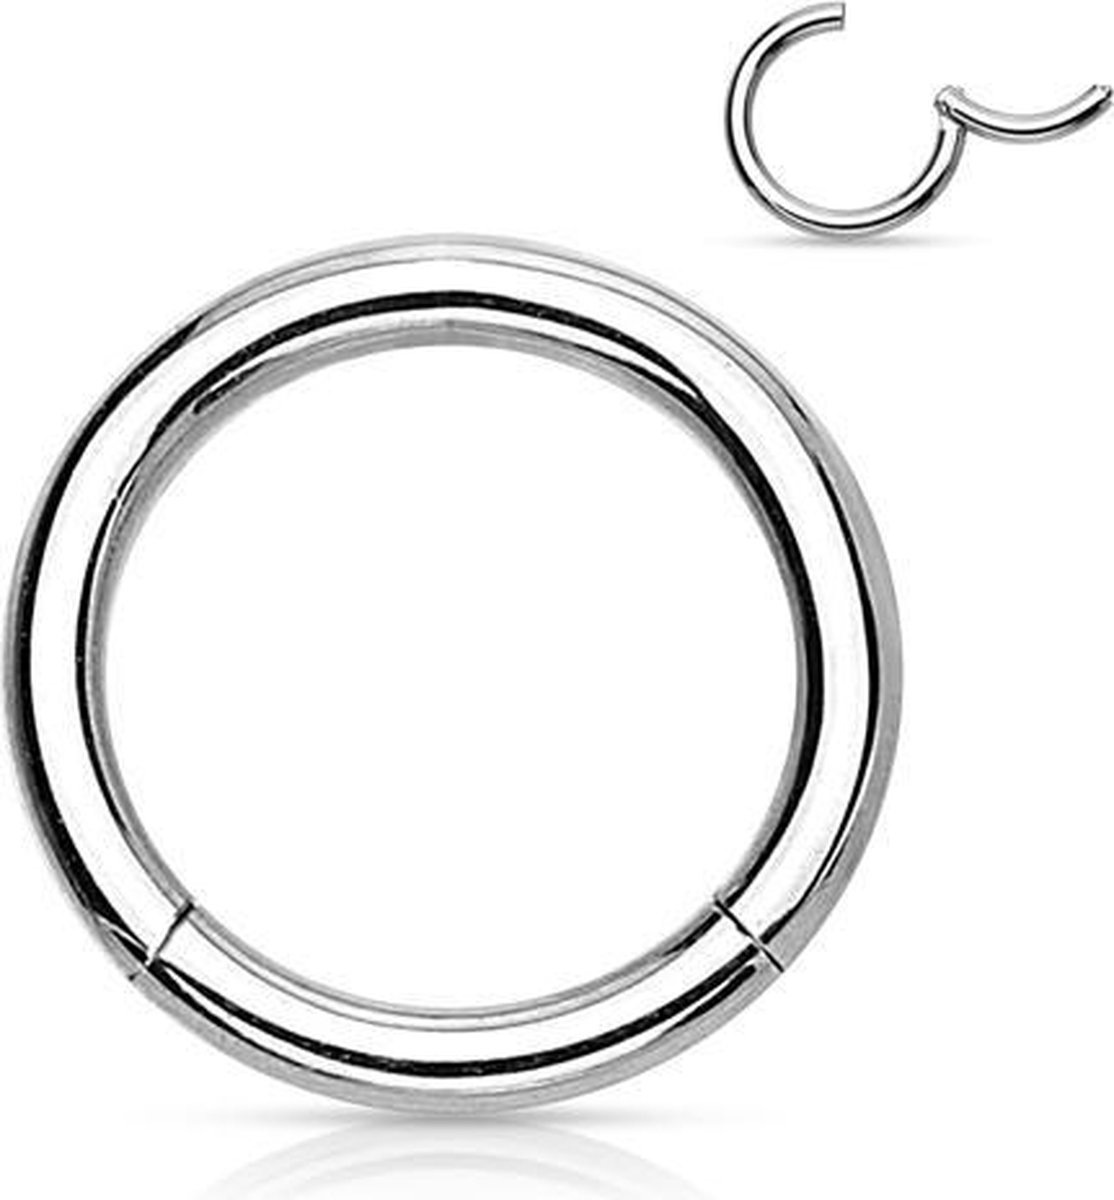 Piercing ring high quality 6mm - LMPiercings NL